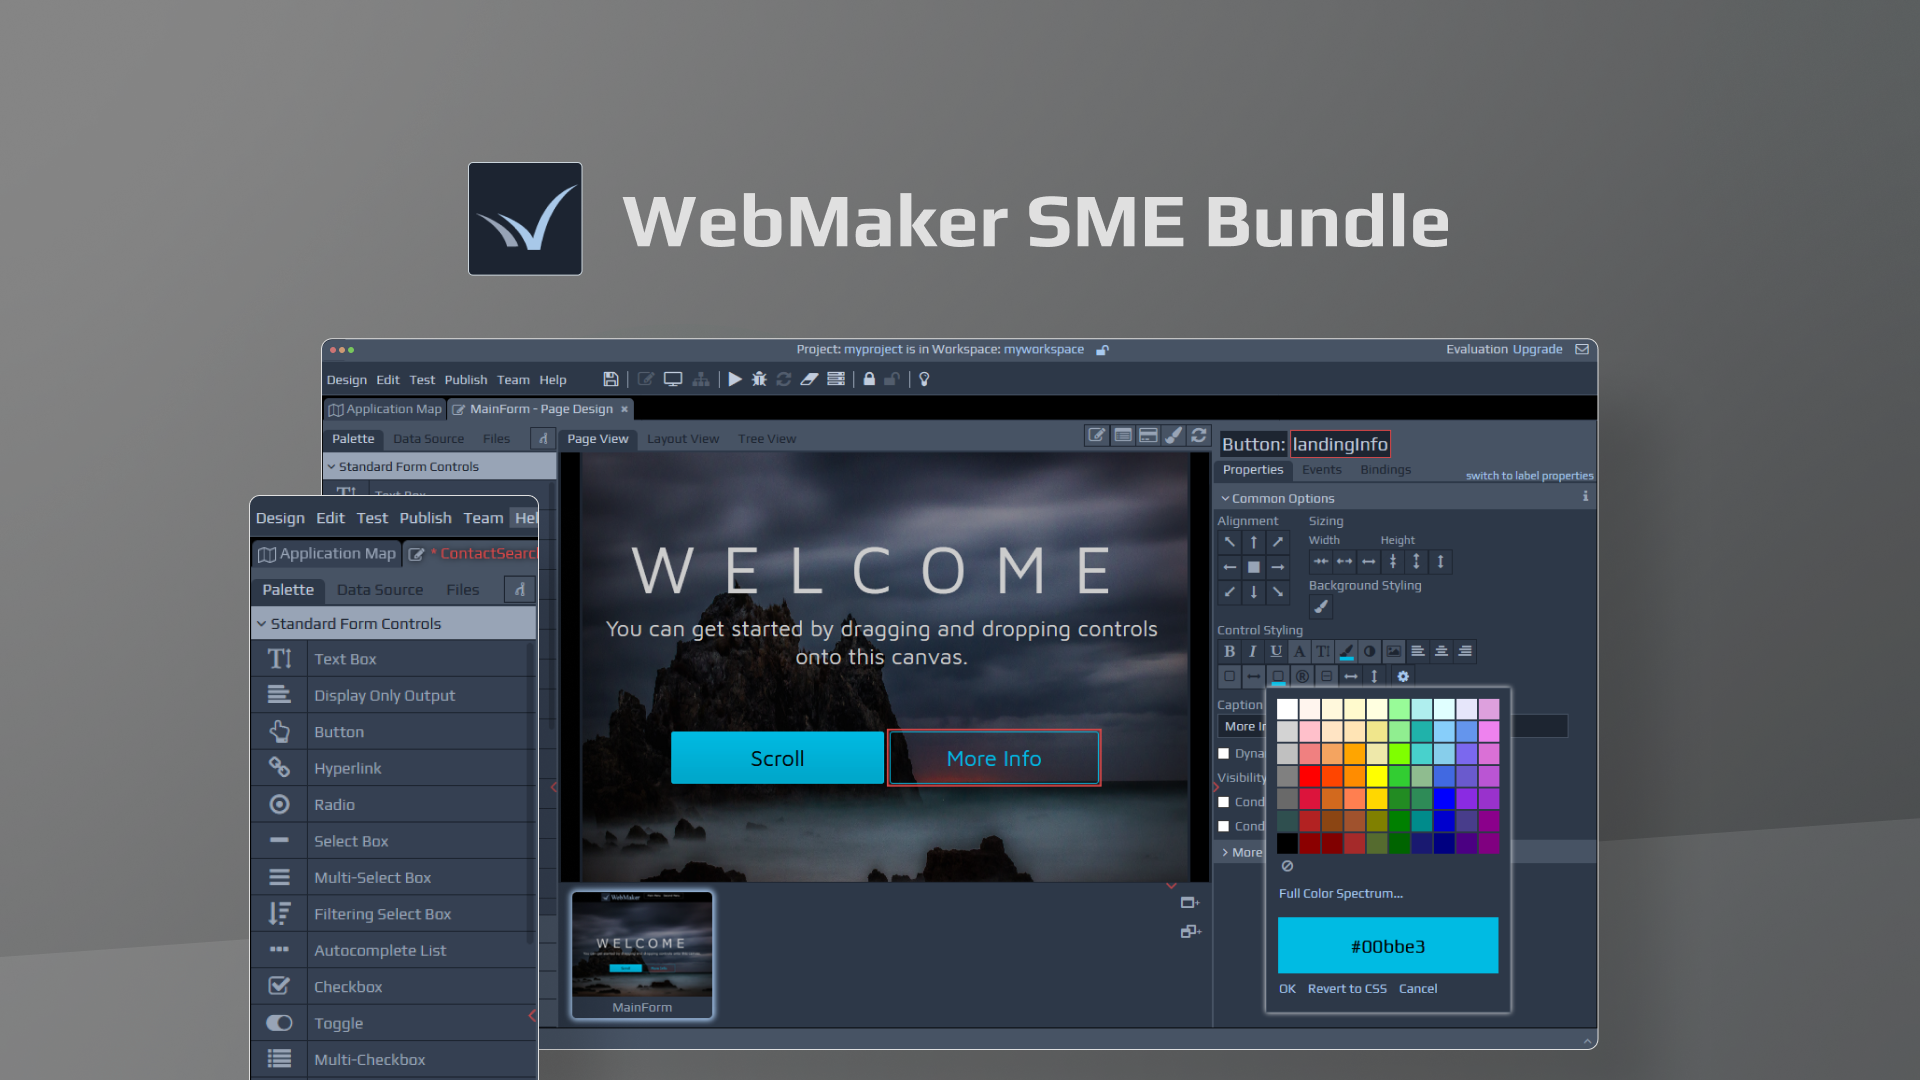 Hyfinity WebMaker SME Bundle